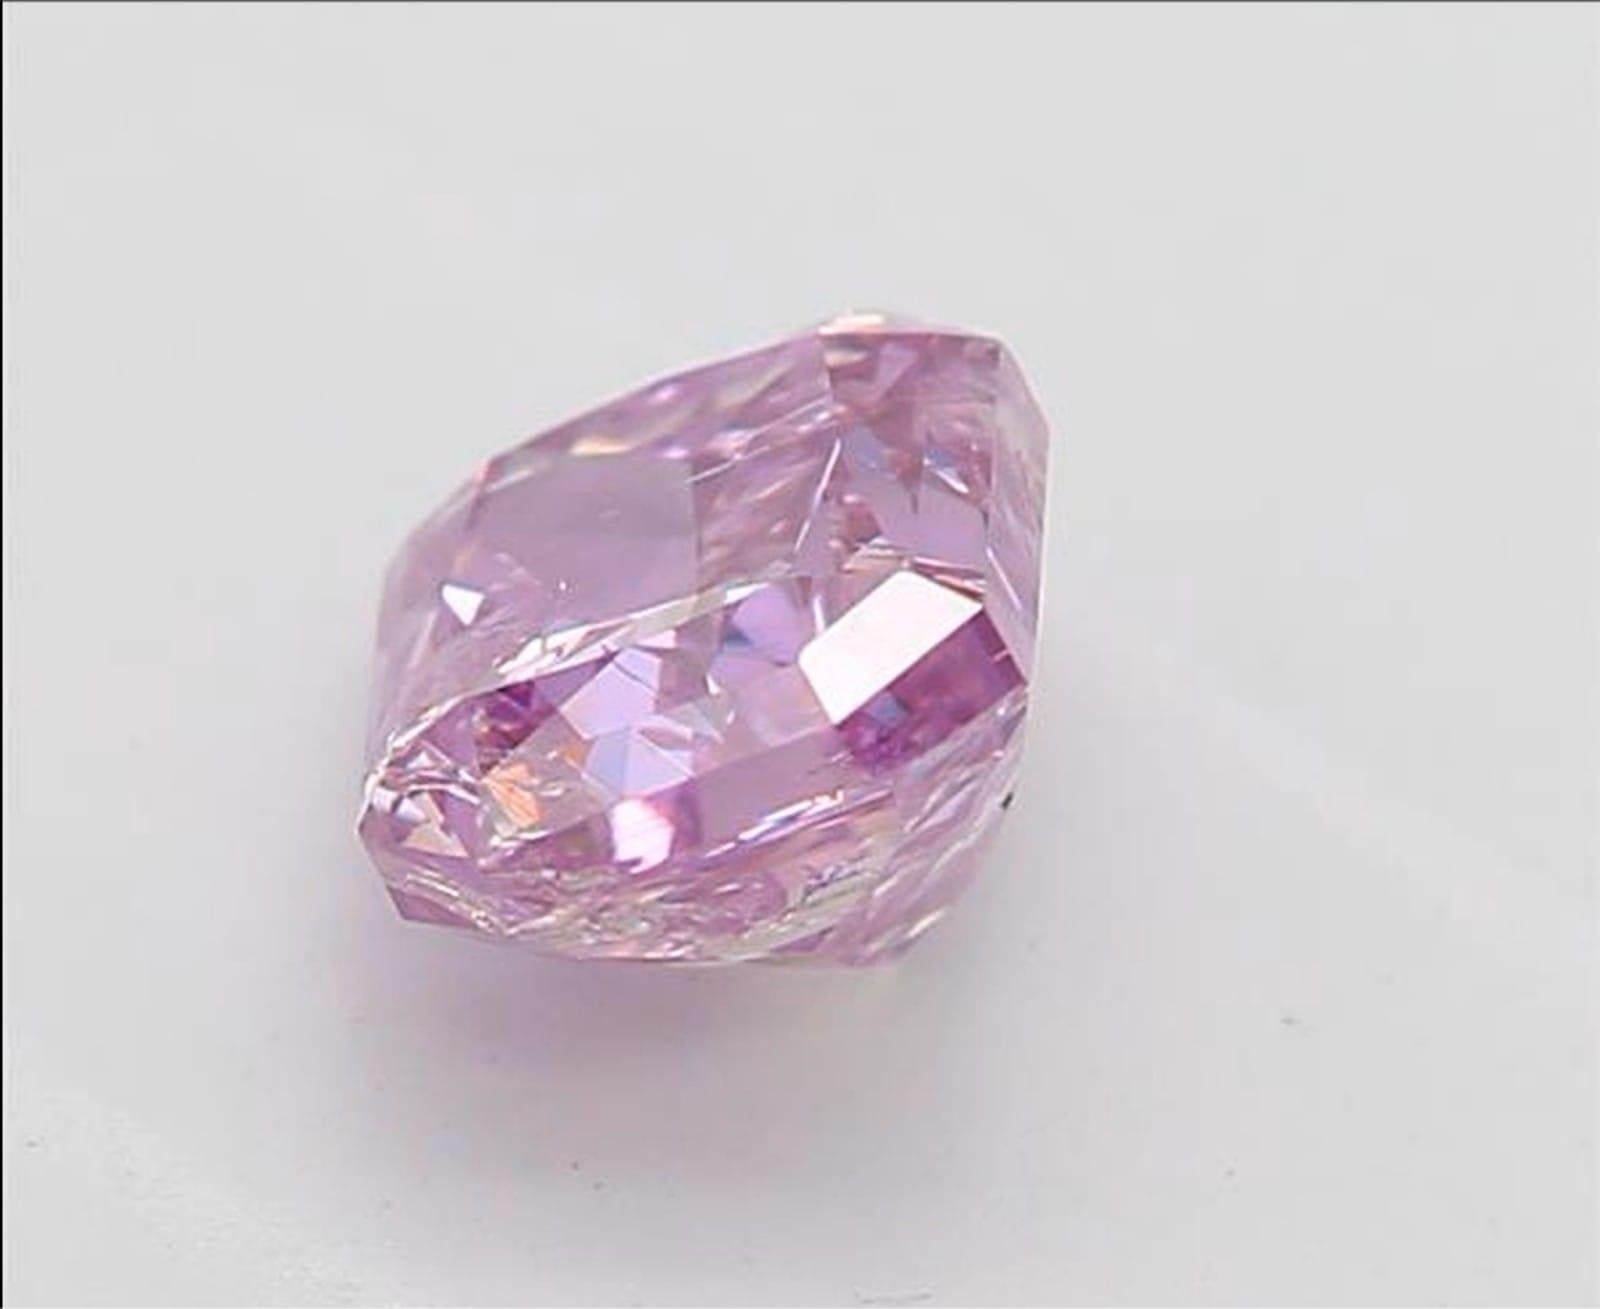 Radiant Cut 0.57 Carat Fancy Purple Pink Radiant cut diamond I2 Clarity GIA Certified For Sale